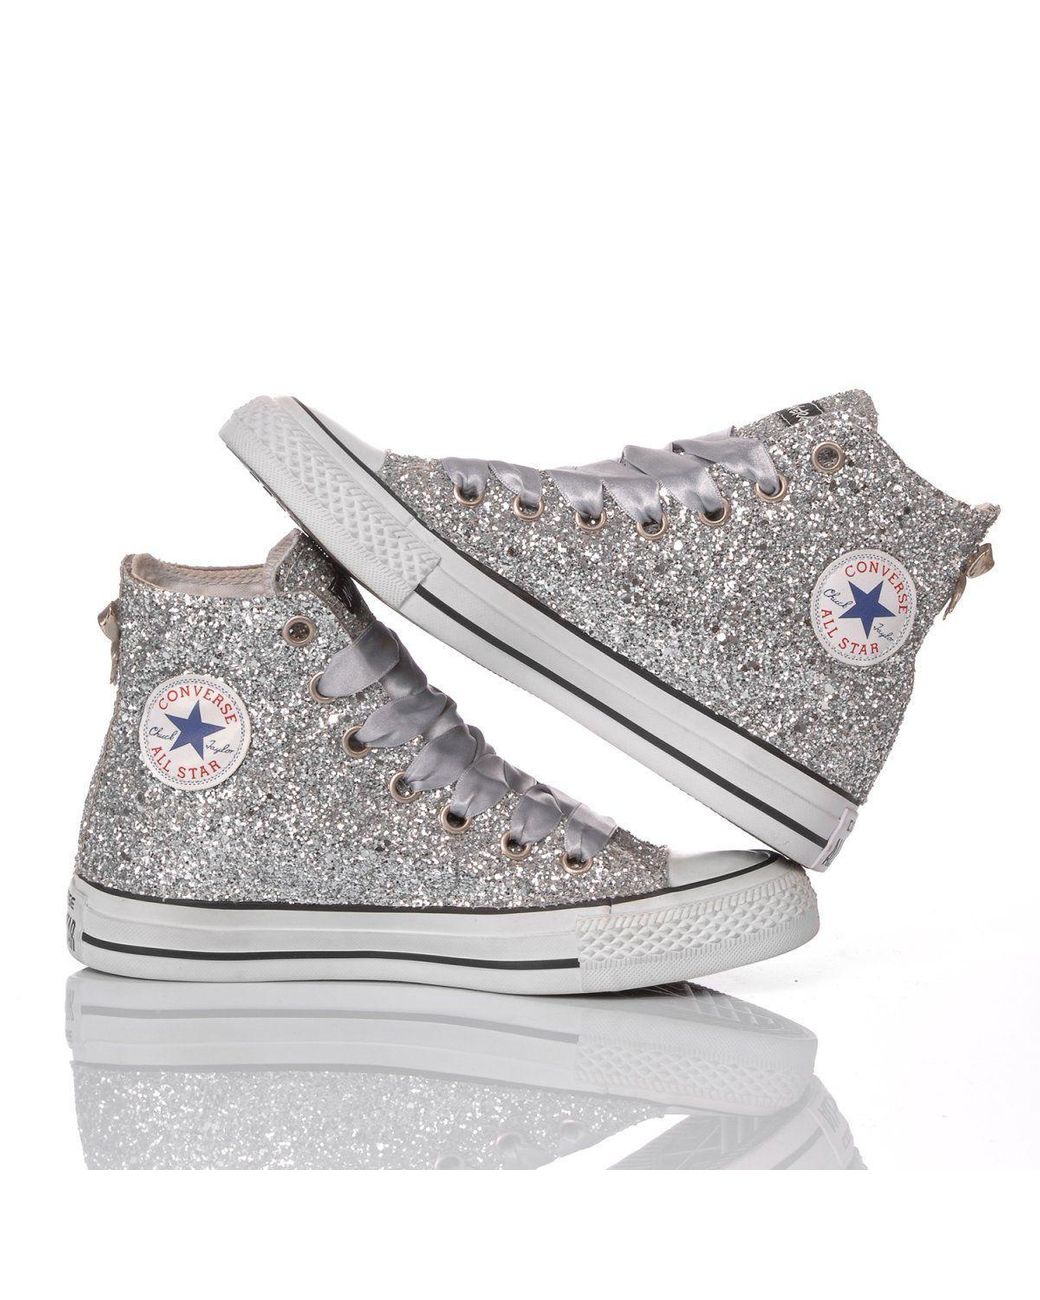 Converse Glitter Hi Top Sneakers in Silver (Metallic) - Save 30% | Lyst